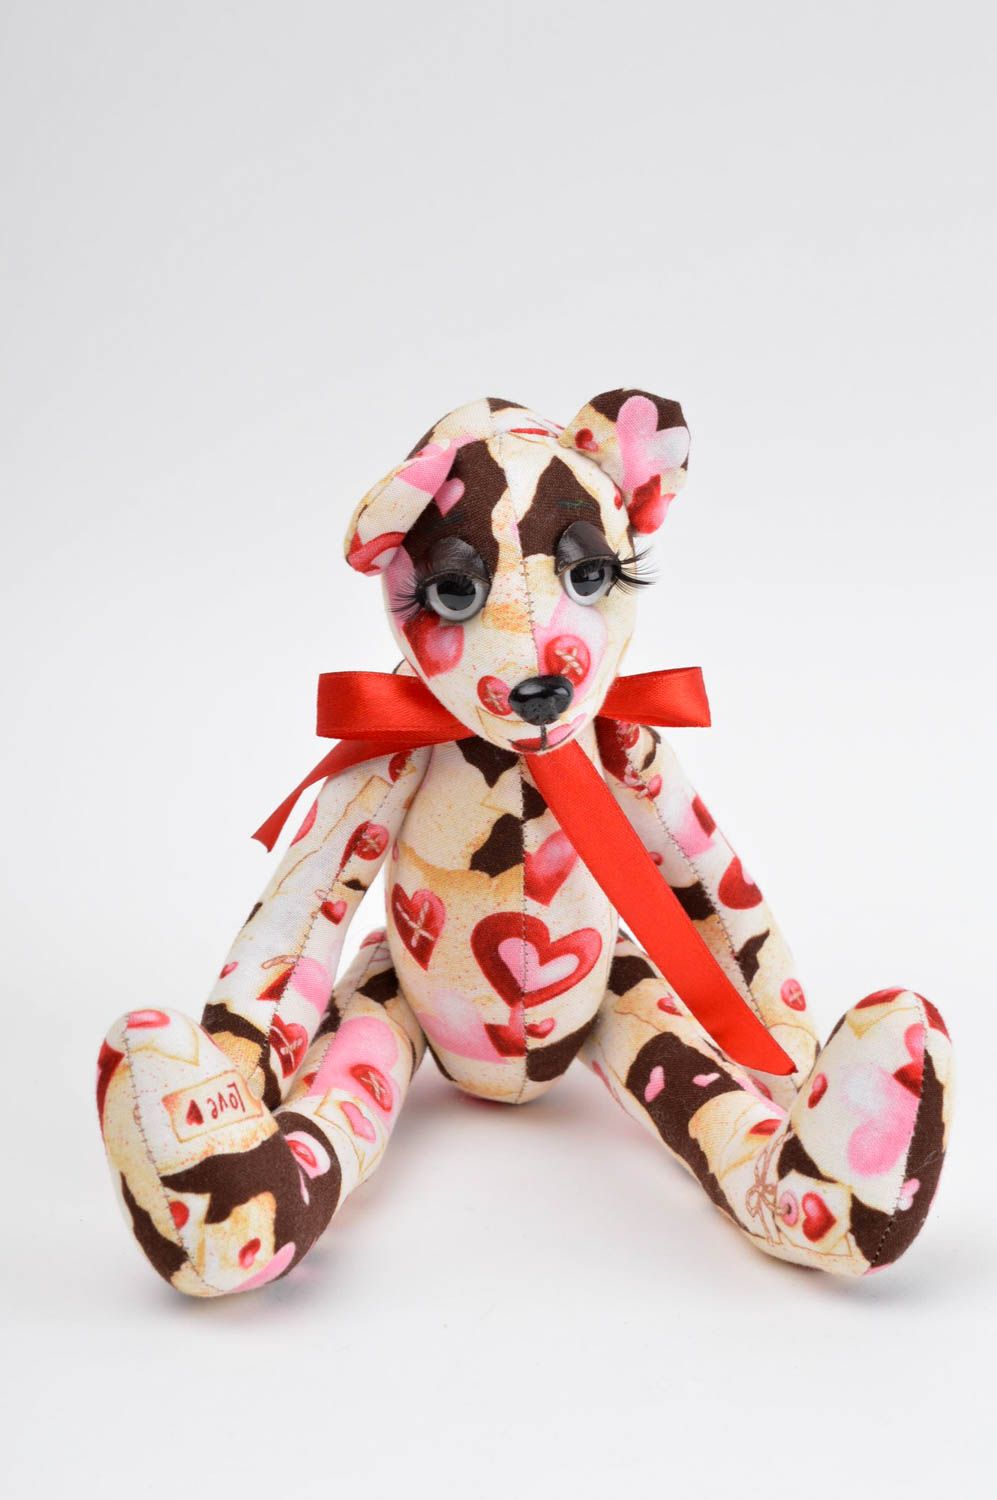 Handmade toy animal toy for children nursery decor ideas soft toy for kids photo 3